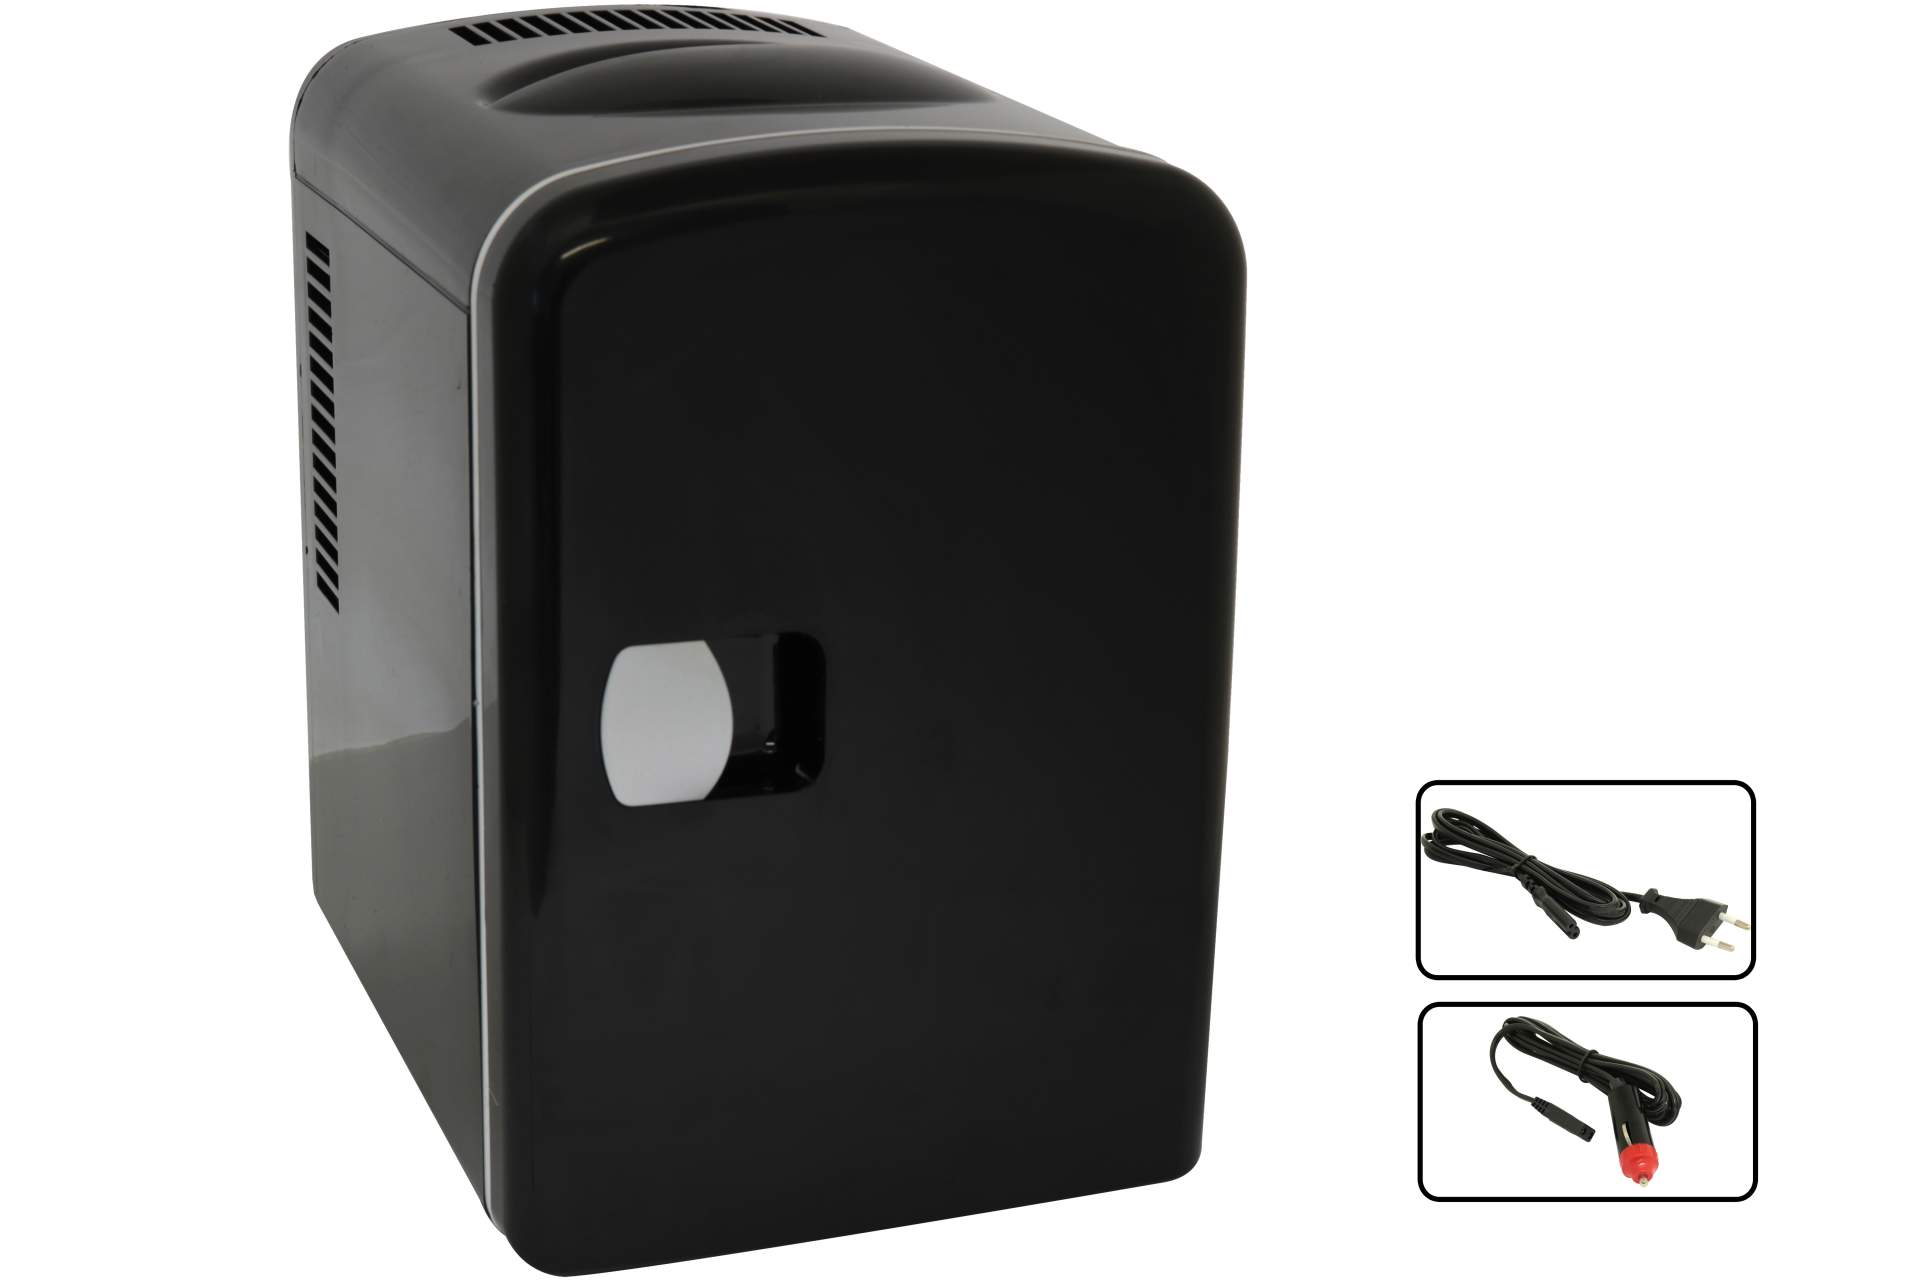 Mini Kühlschrank Deski schwarz 4 Liter kühlt und heizt 12V/220V tragbar, Auto, KFZ